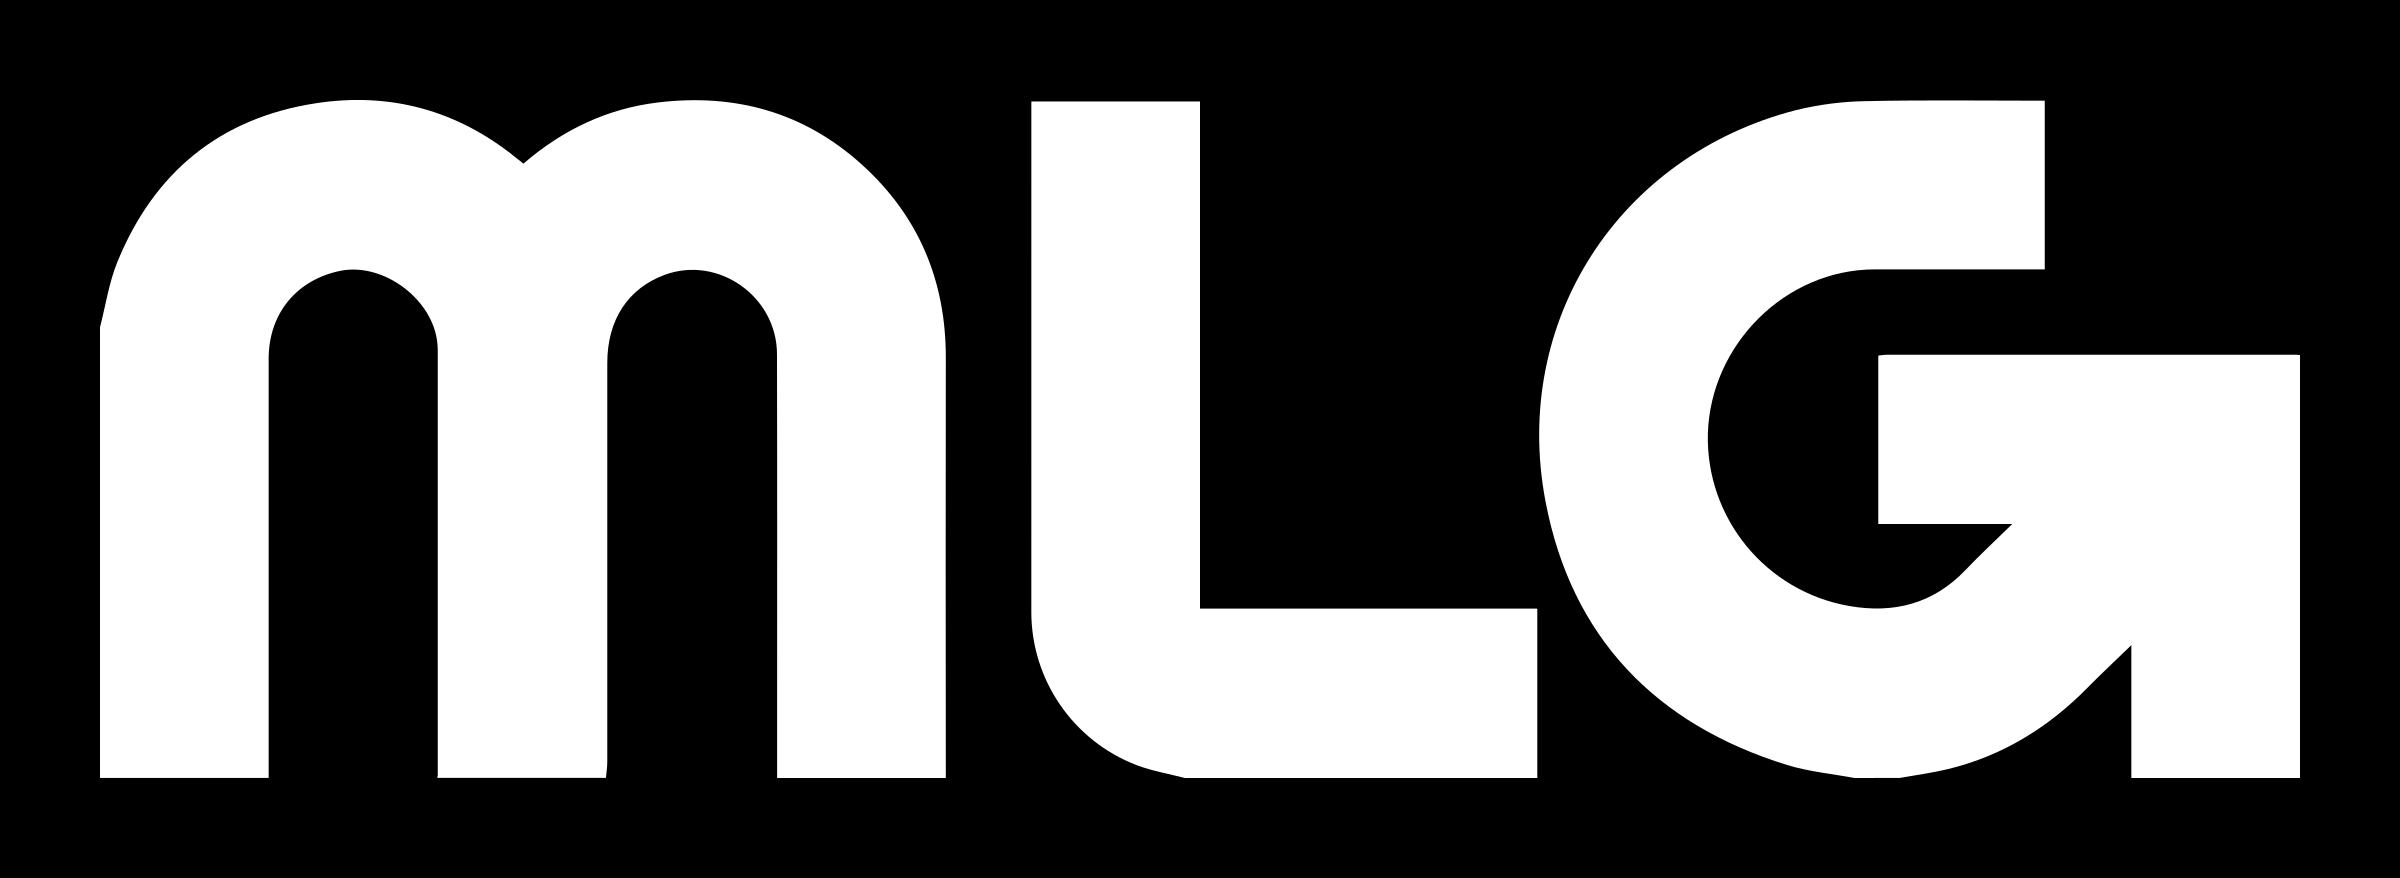 MLG Logo - MLG Logo PNG Transparent & SVG Vector - Freebie Supply